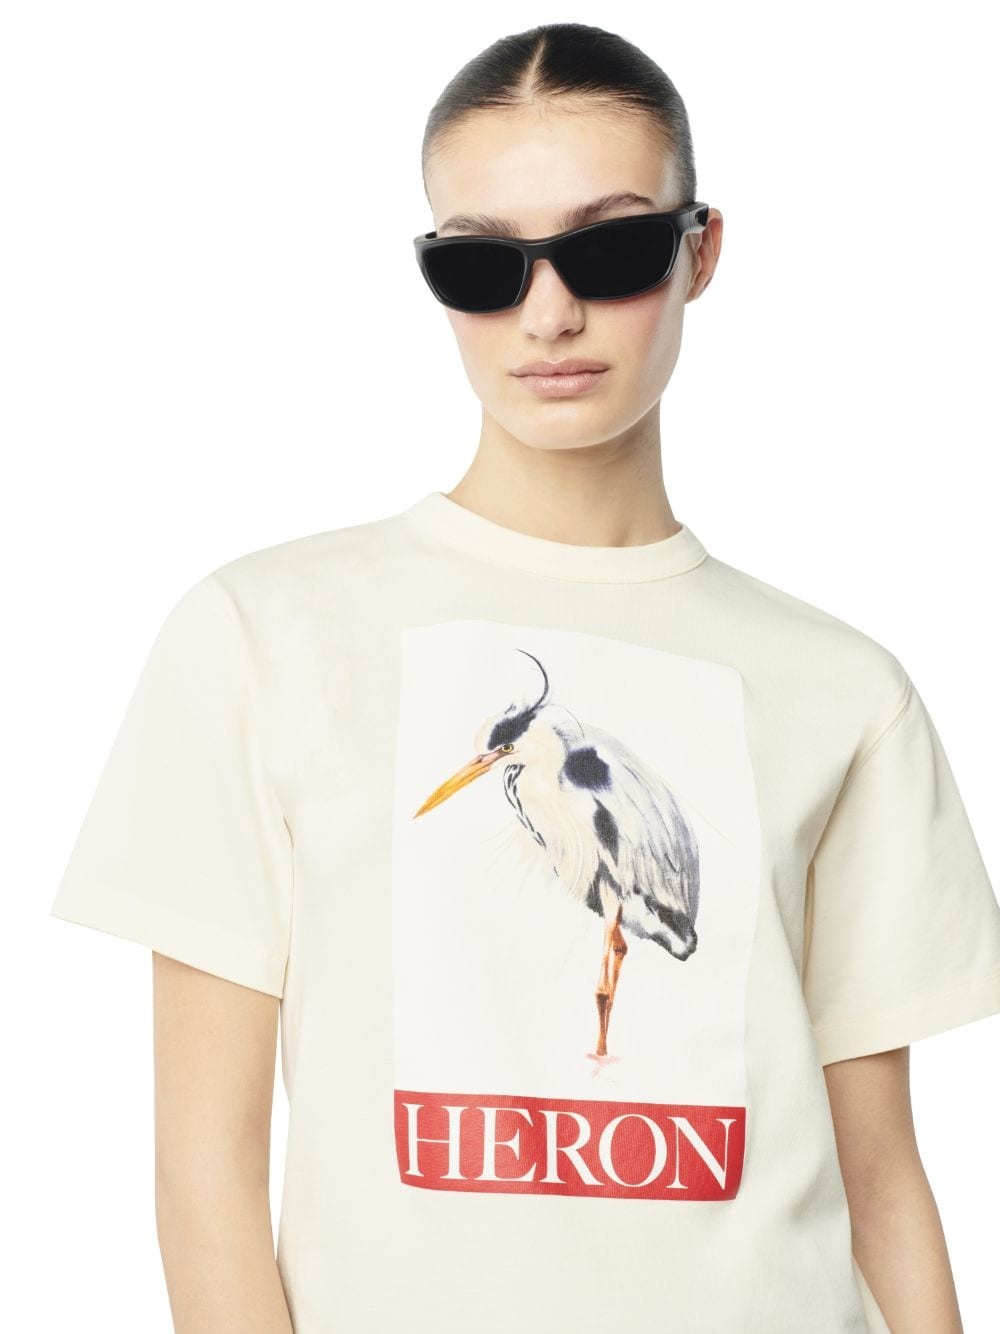 Heron Bird Painted Ss Tee - 5